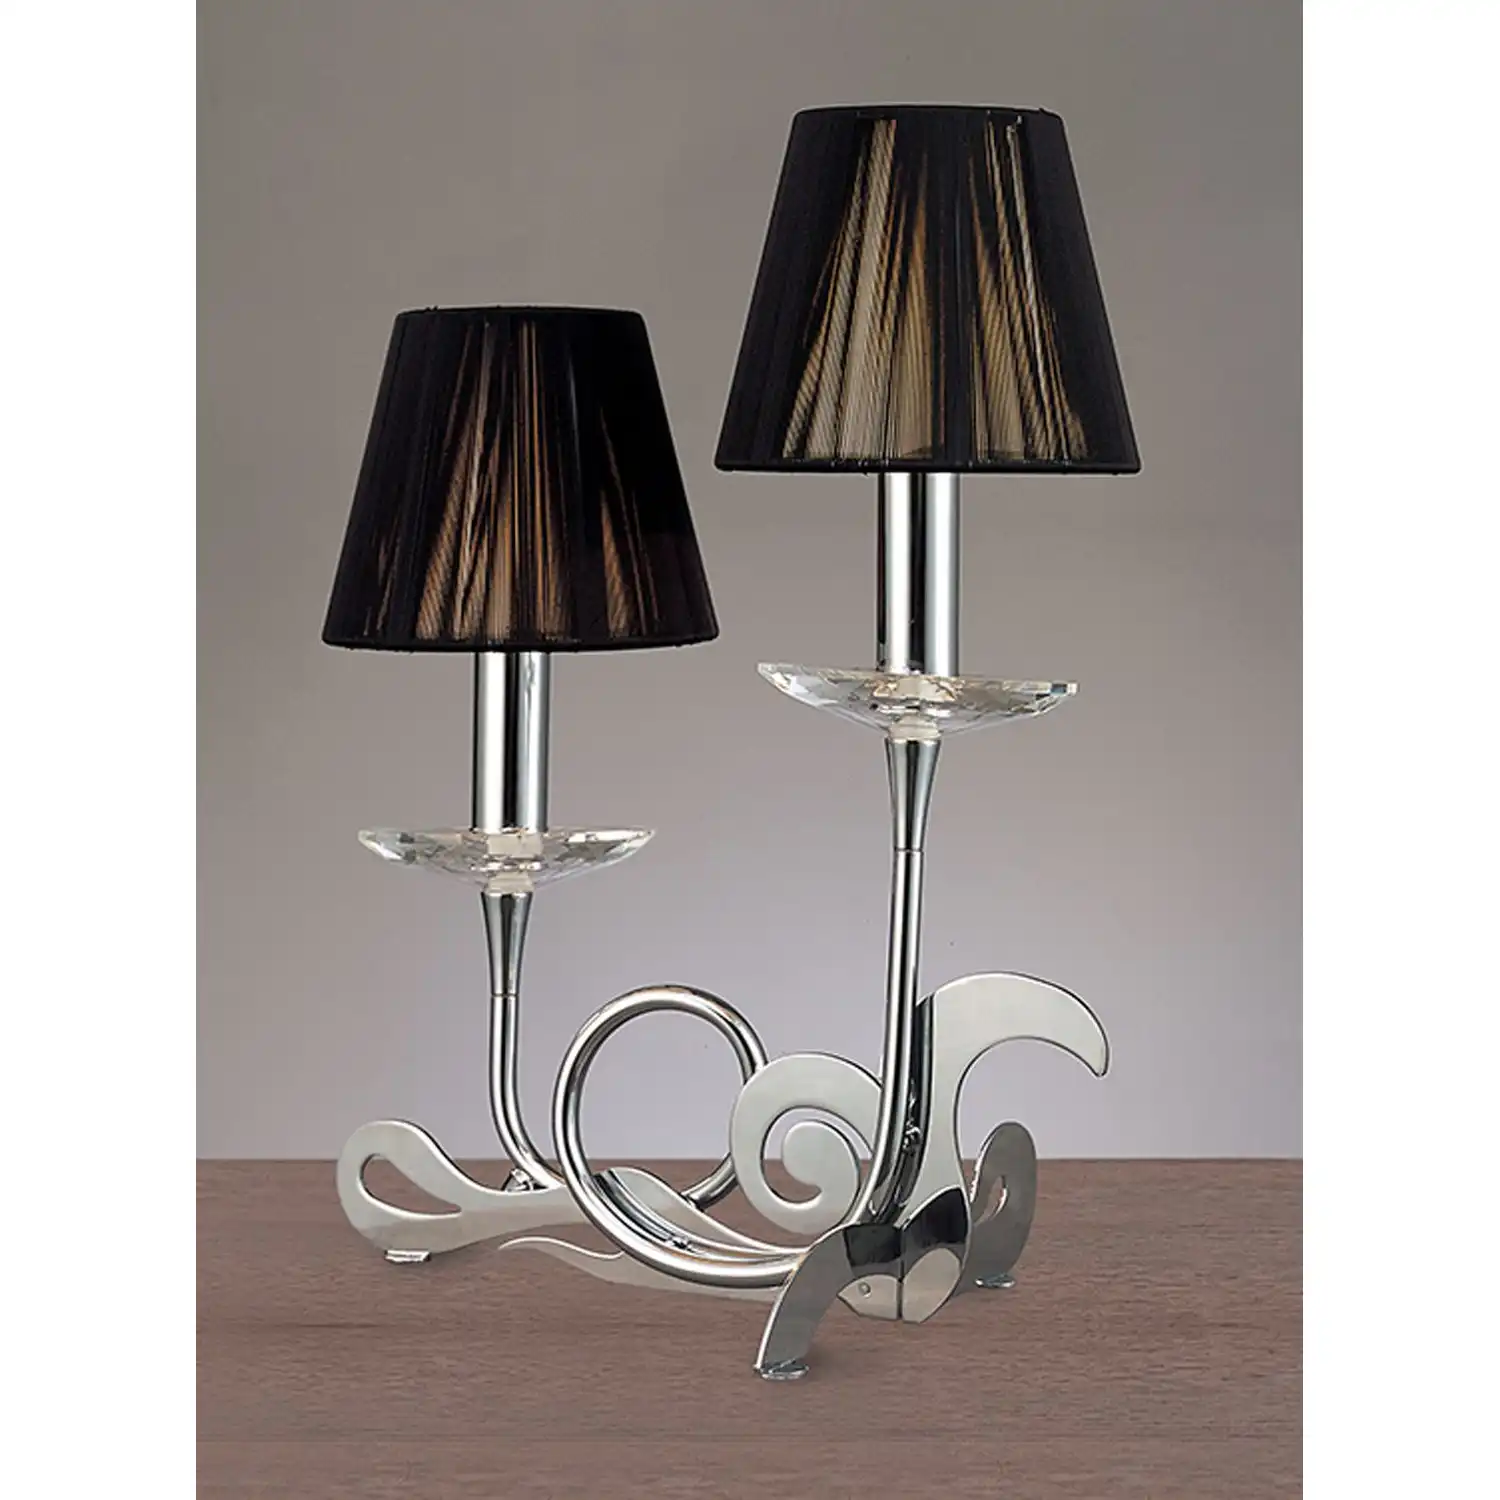 Acanto Table Lamp 2 Light E14, Polished Chrome With Black Shades